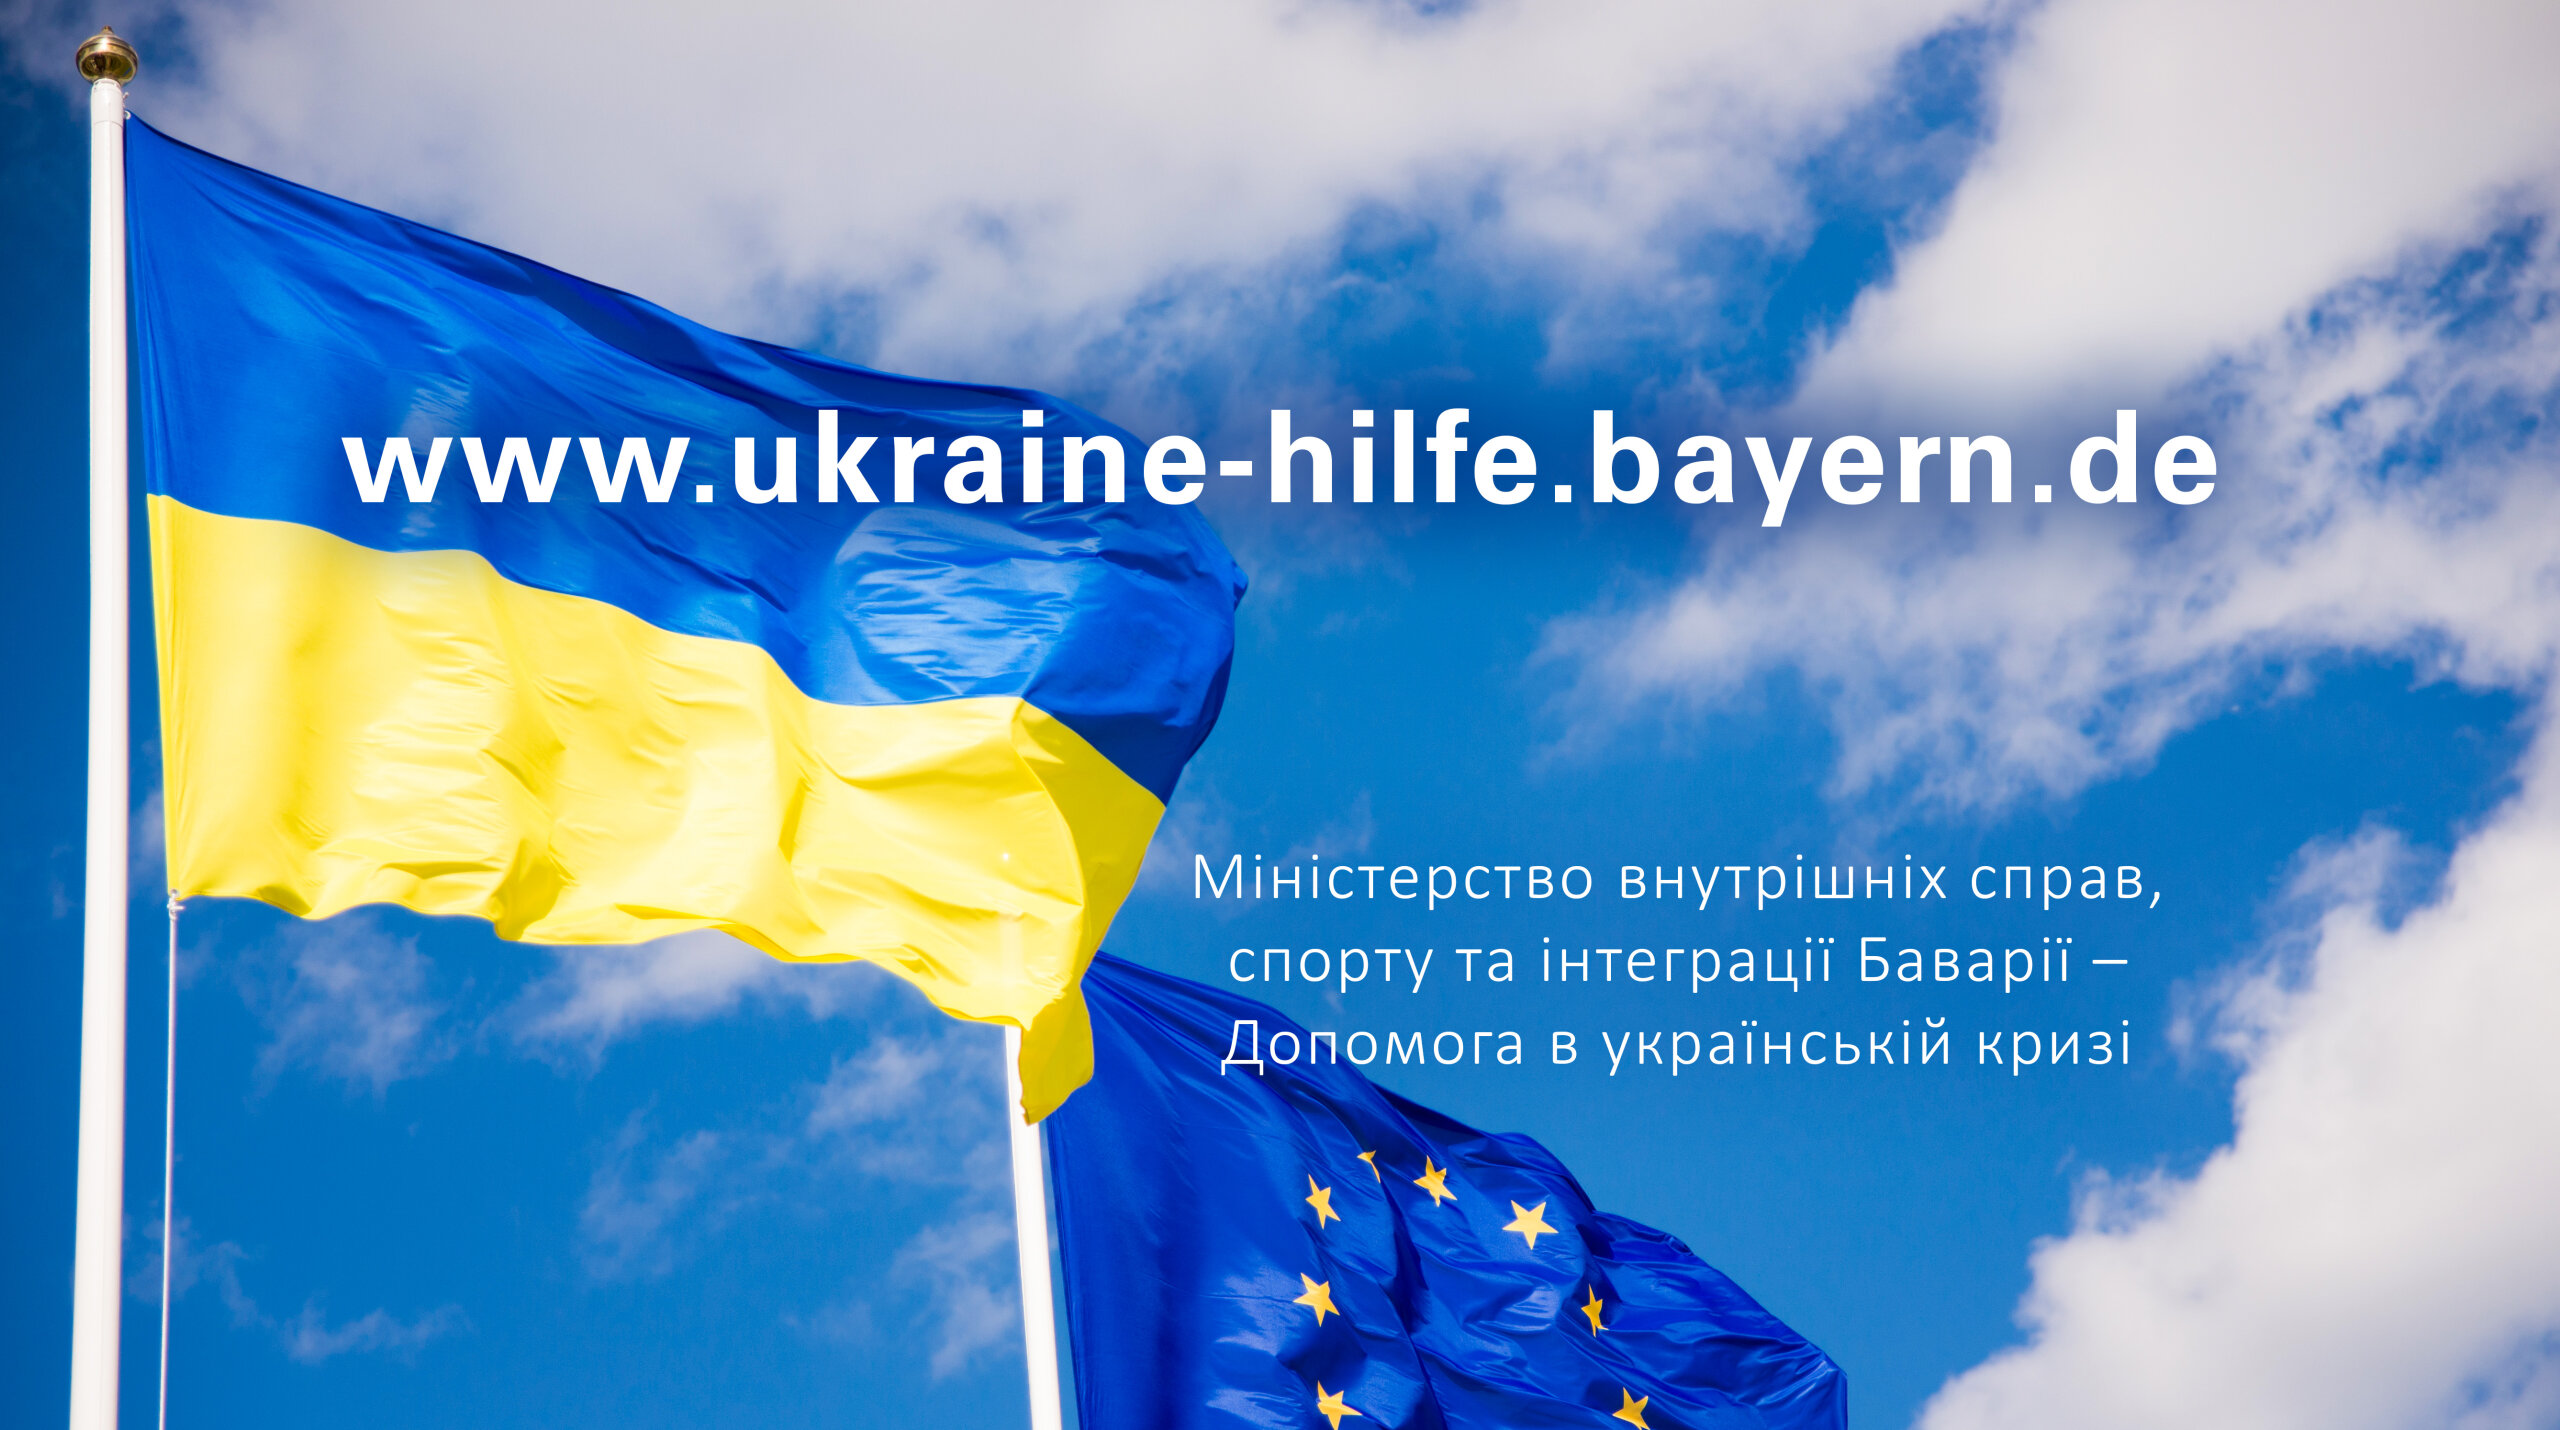 Grafik zur Internetseite www.ukraine-hilfe.bayern.de / Допомога в українській кризі